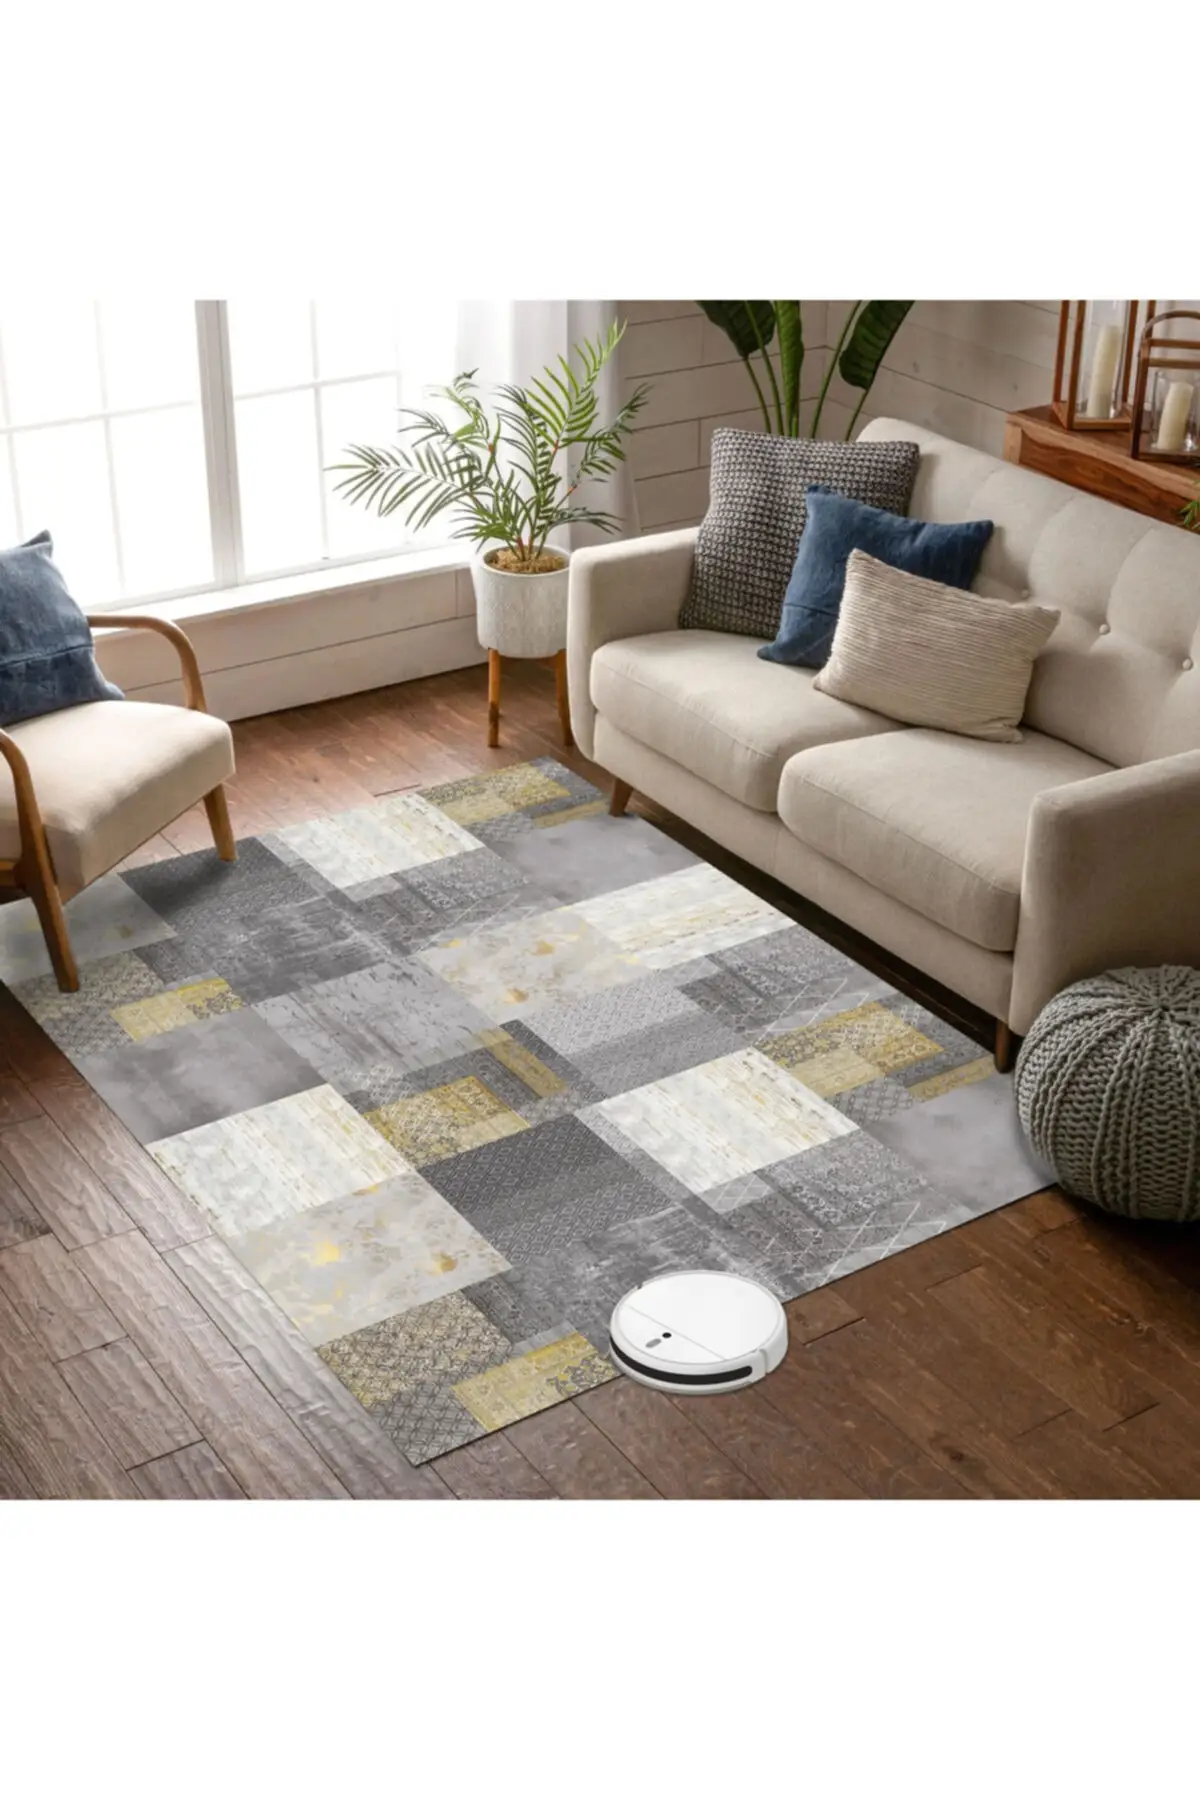 Stone Floor Section Patterned Decorative Anti-Slip Base Digital Print Washable Antibacterial Carpet